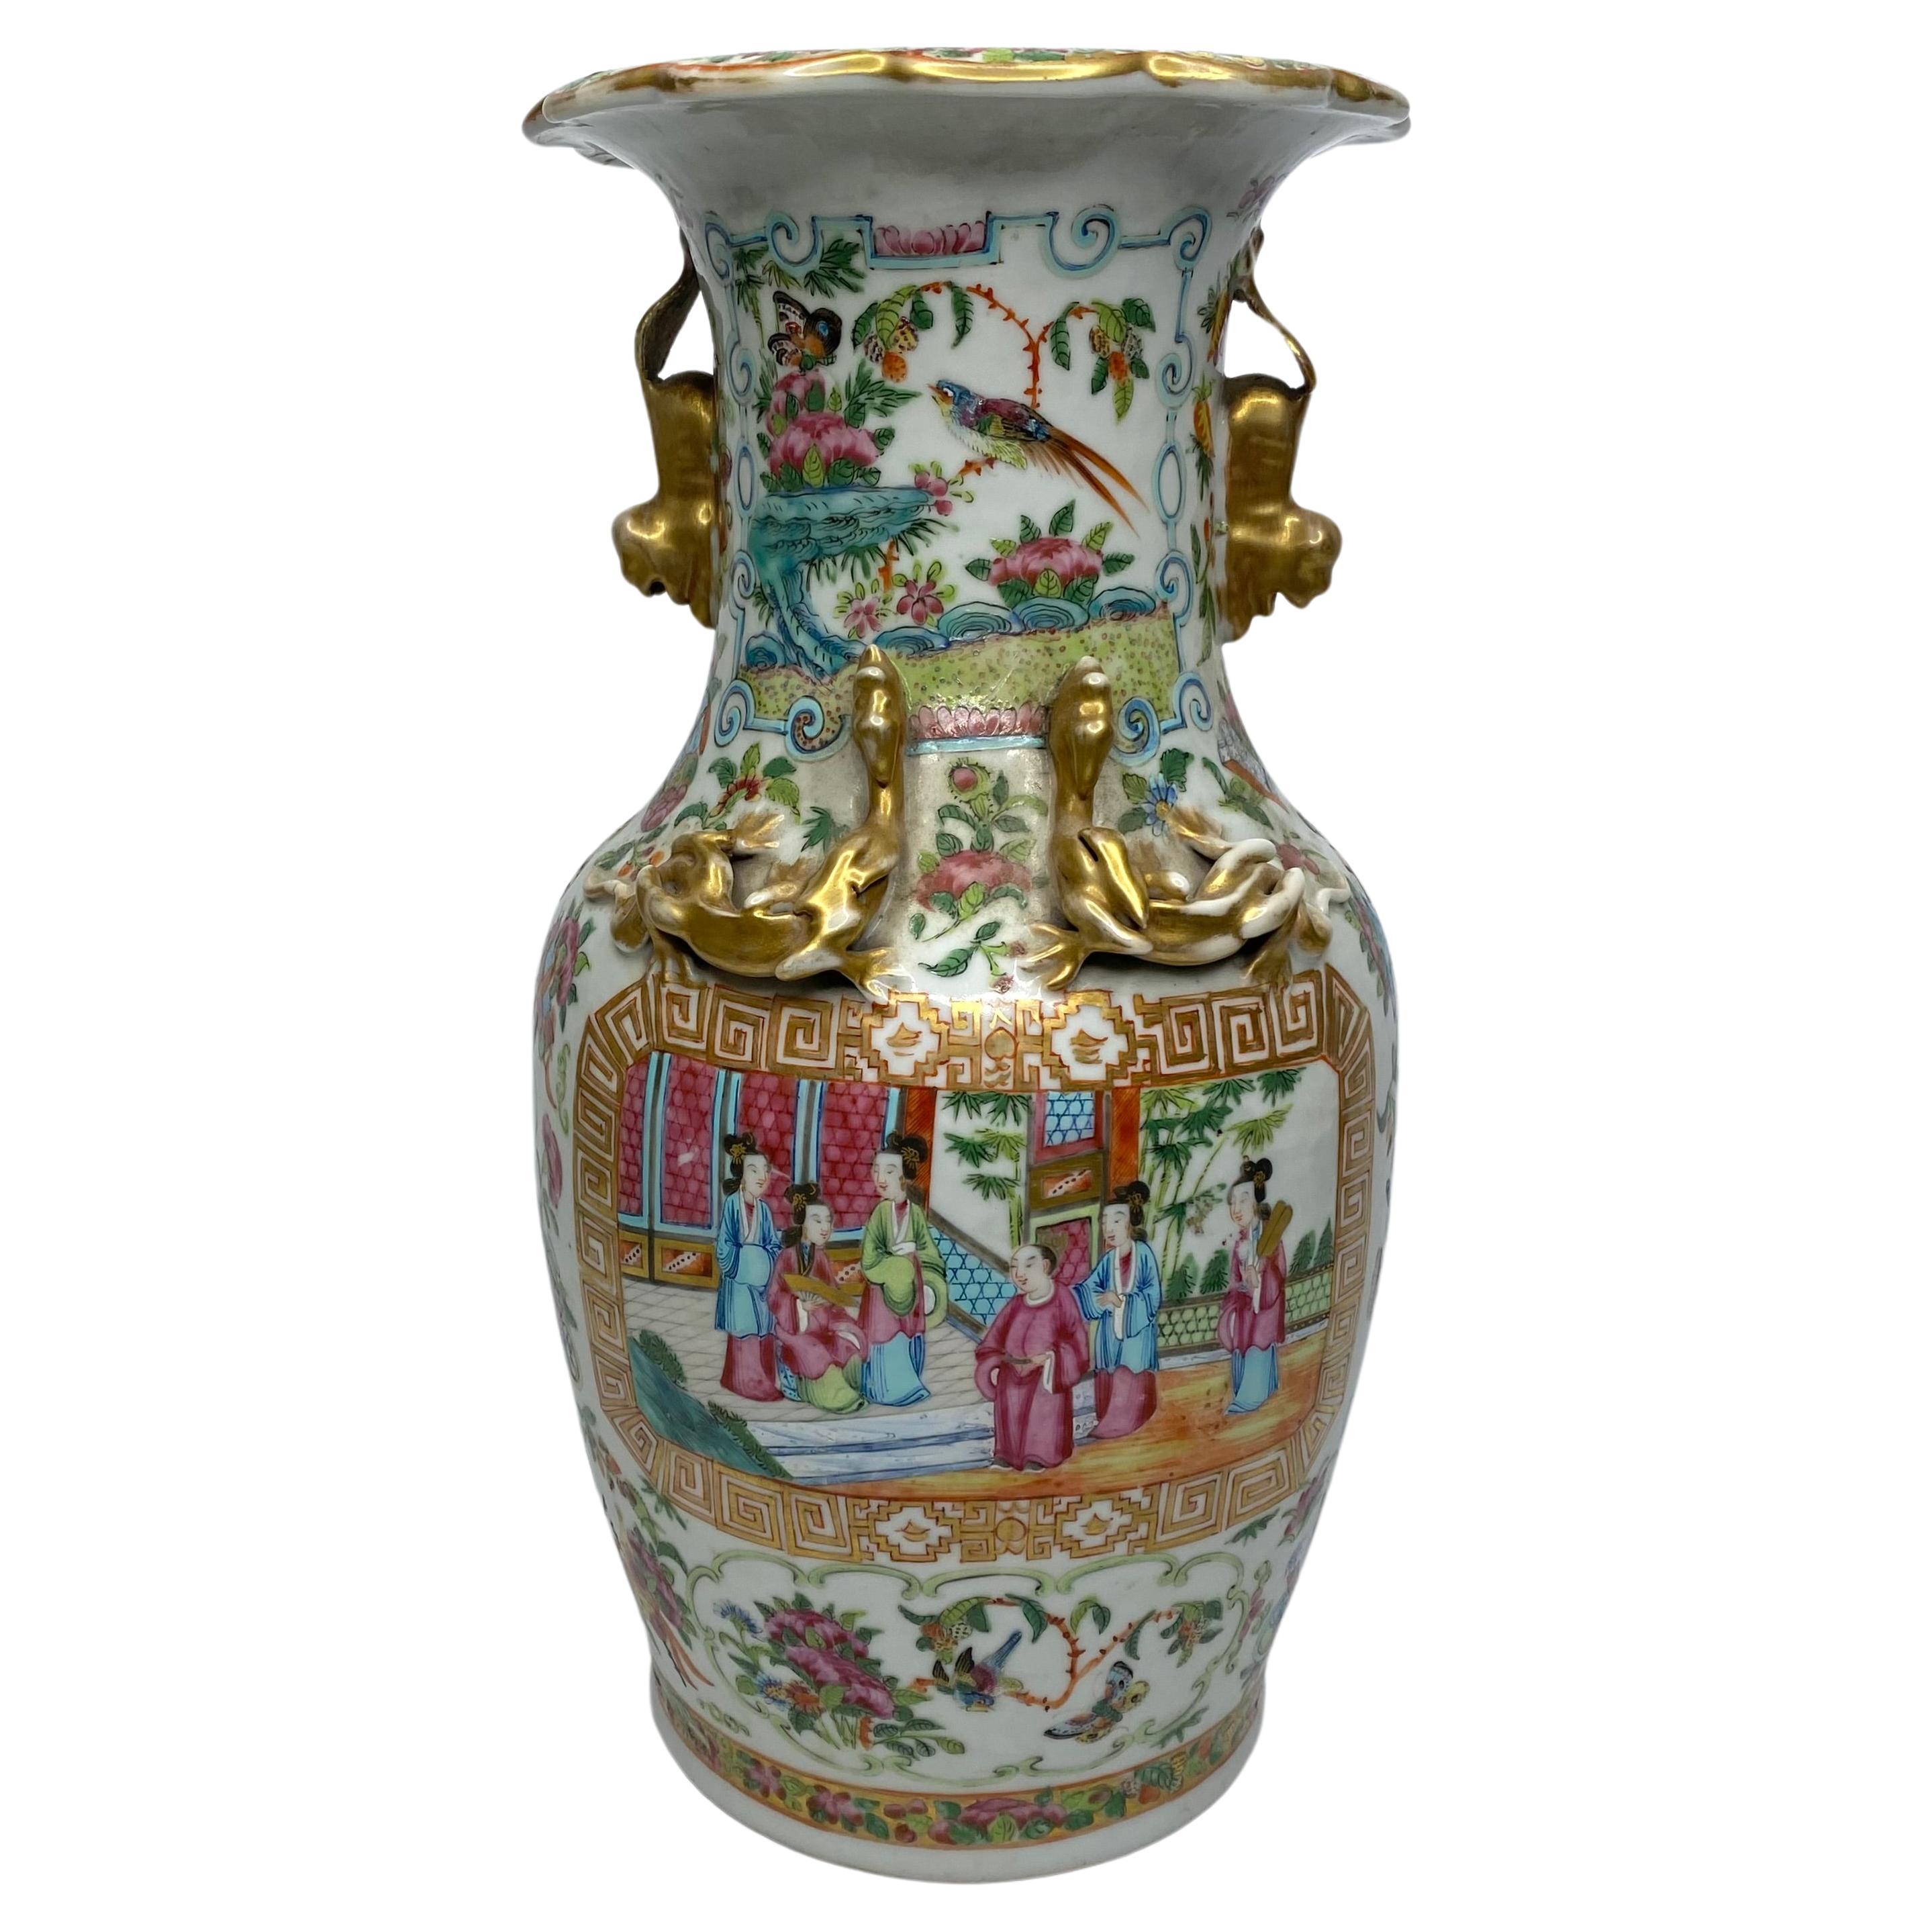 Chinese Cantonese porcelain vase, c. 1870. Qing Dynasty.